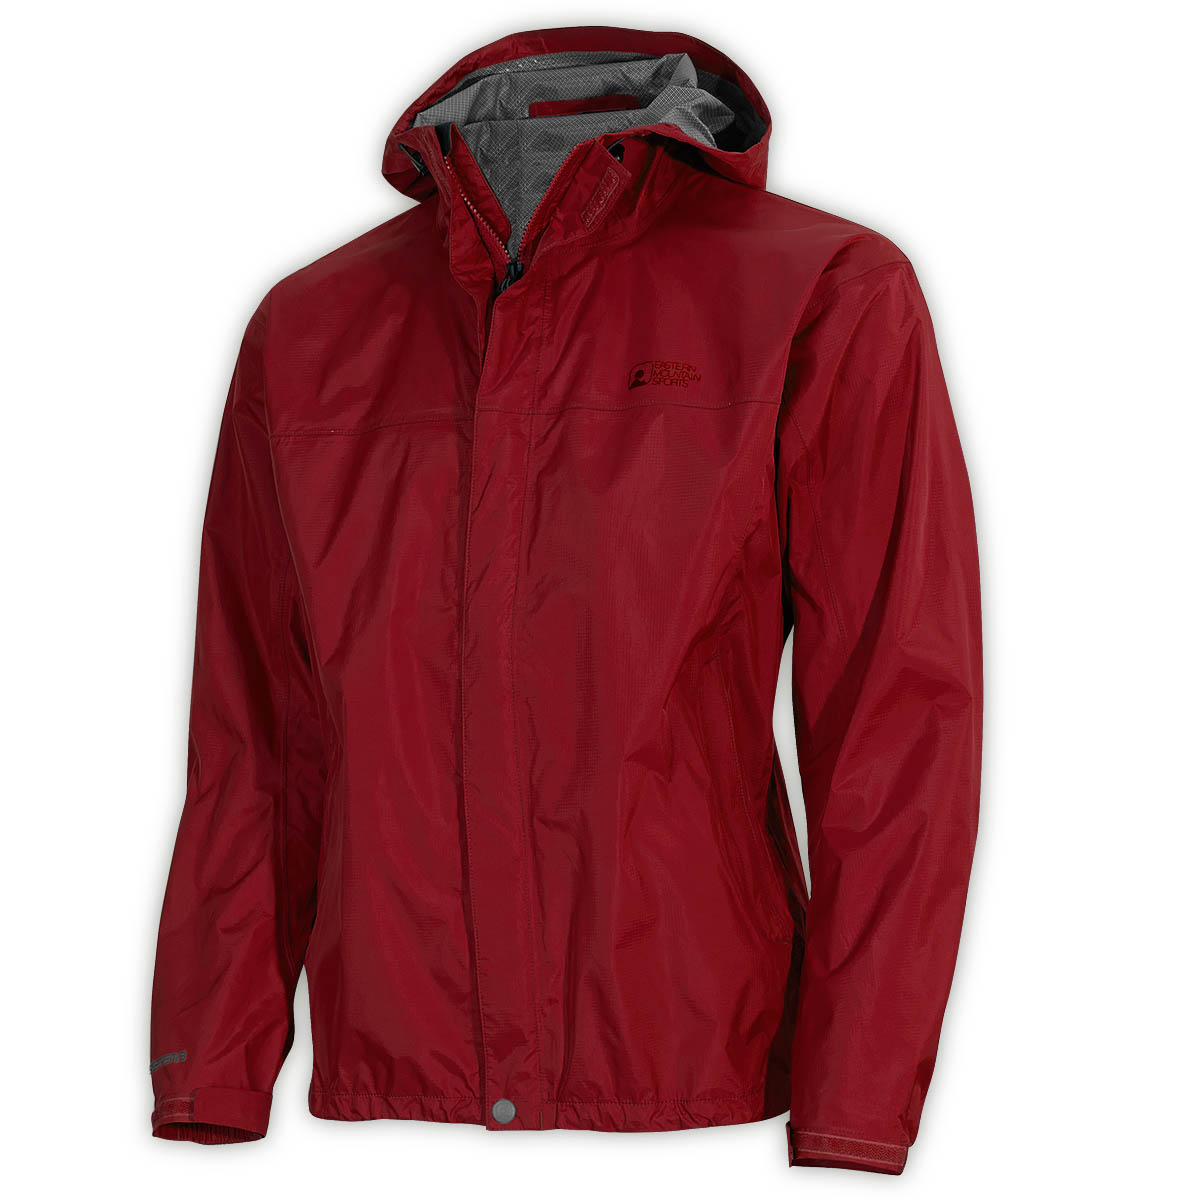 You can get the Thunderhead jacket - EMS' most popular rain gear - for 20 percent off (Photo via ems.com)